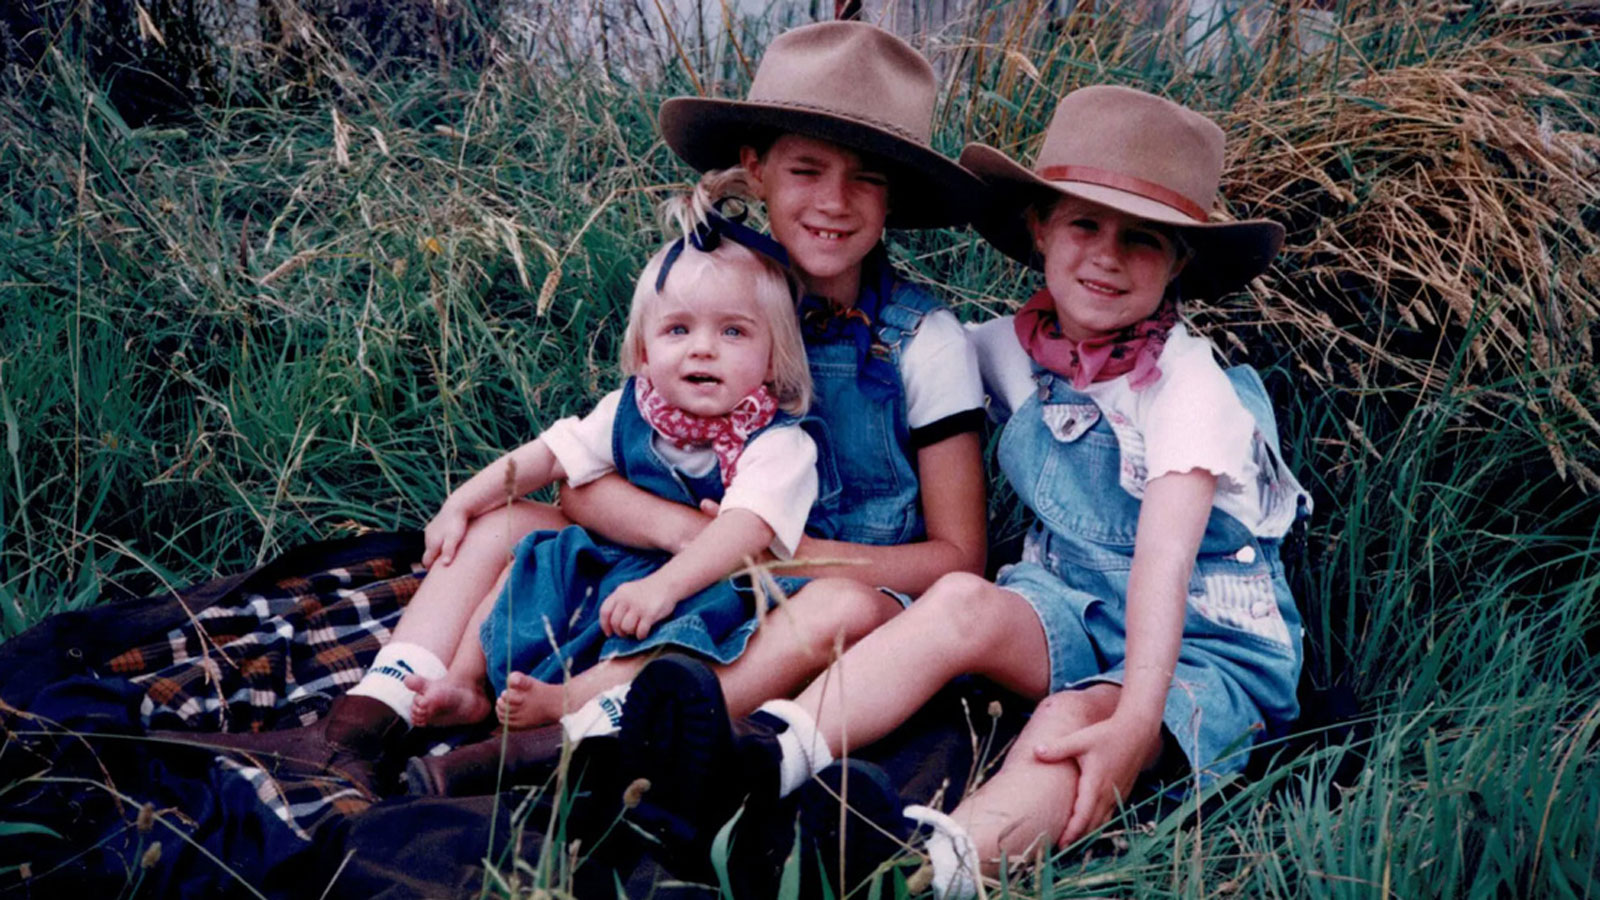 Chloe Higgins and sisters as children